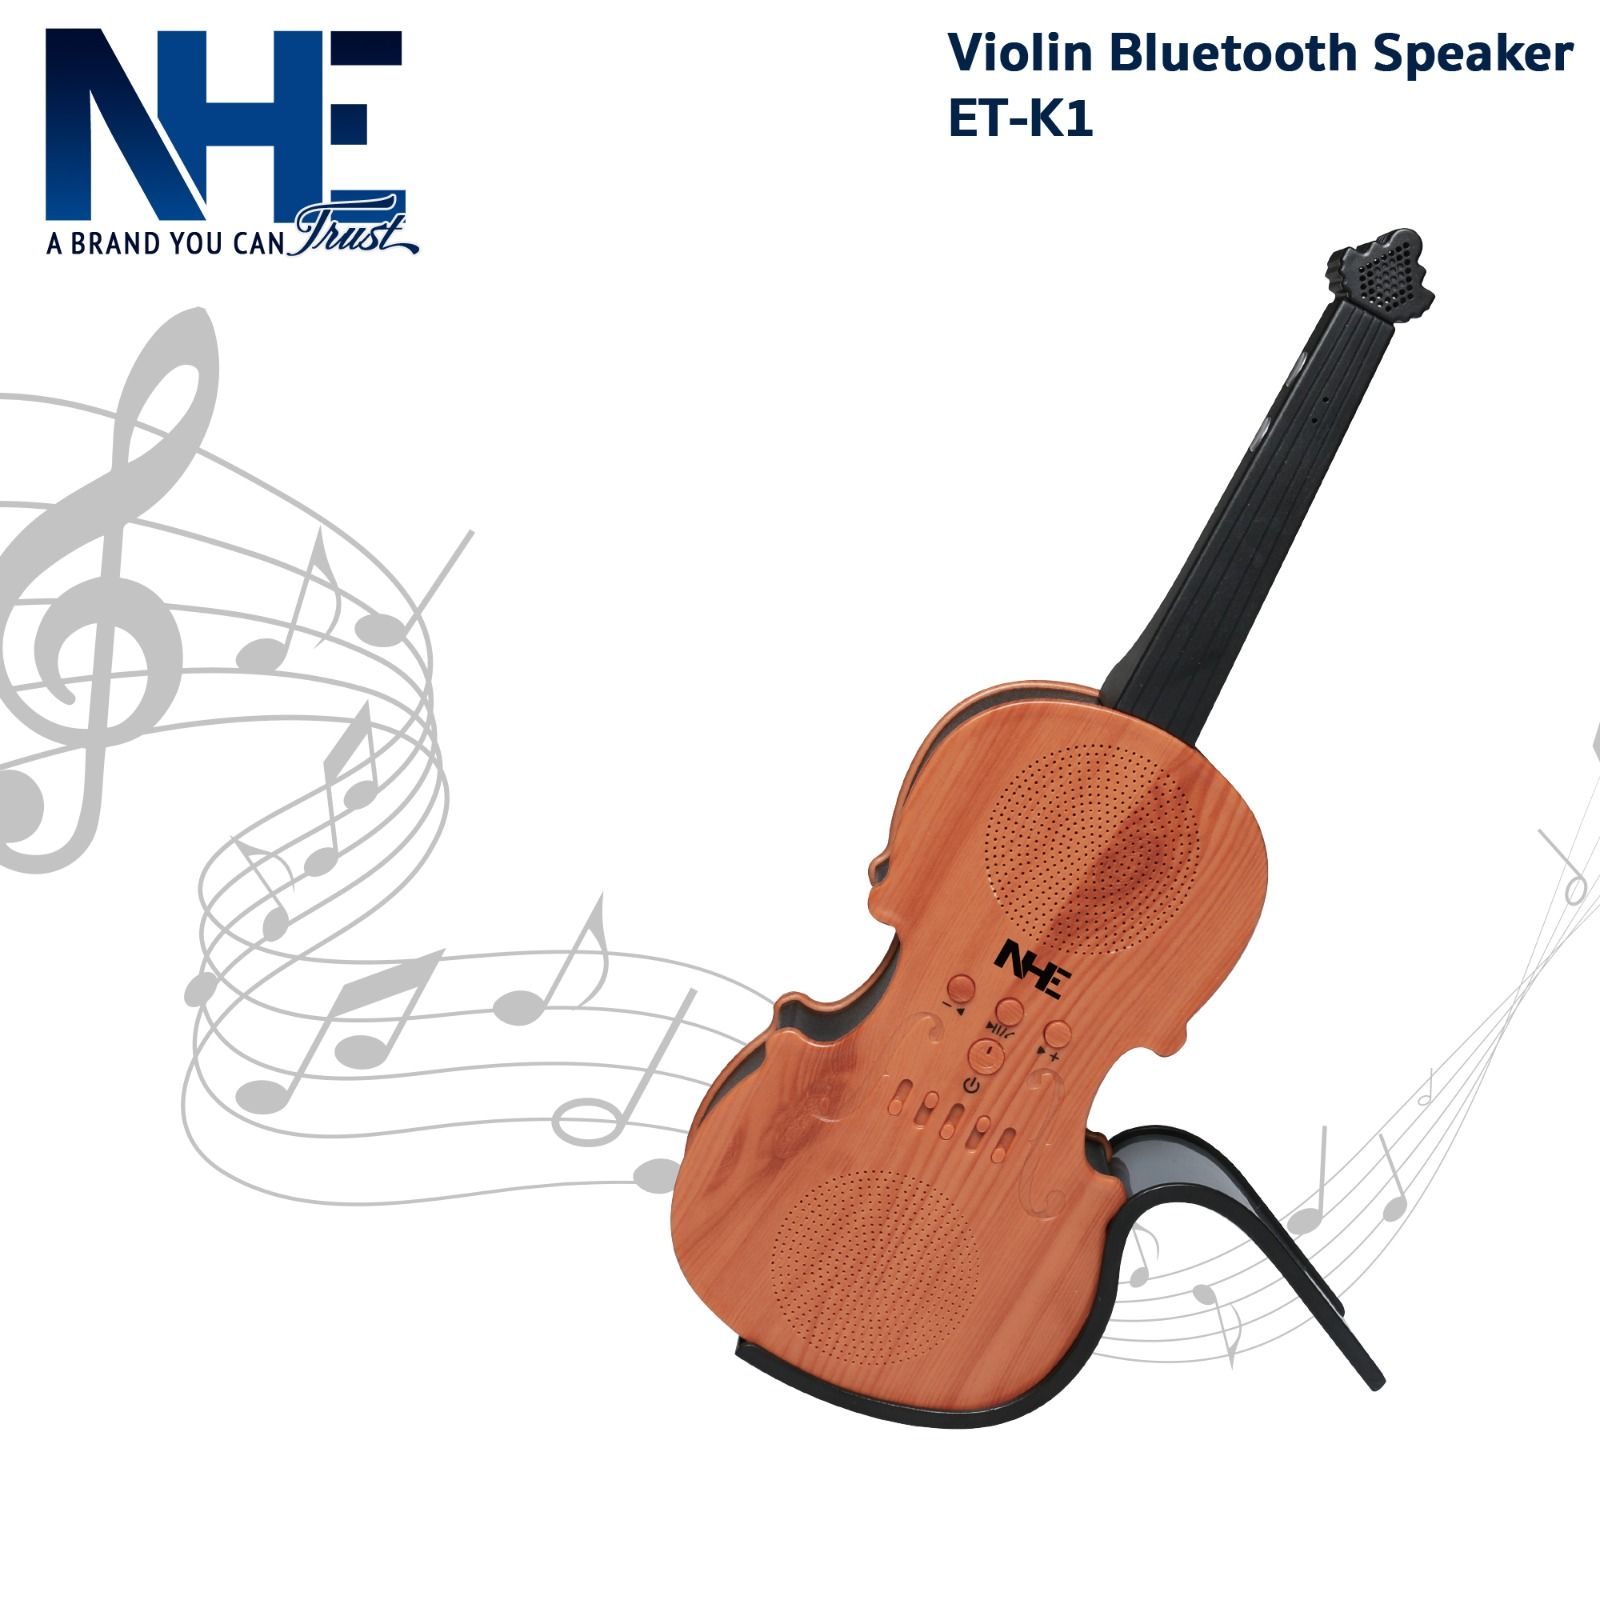 Violin Bluetooth Speaker-ET-K1